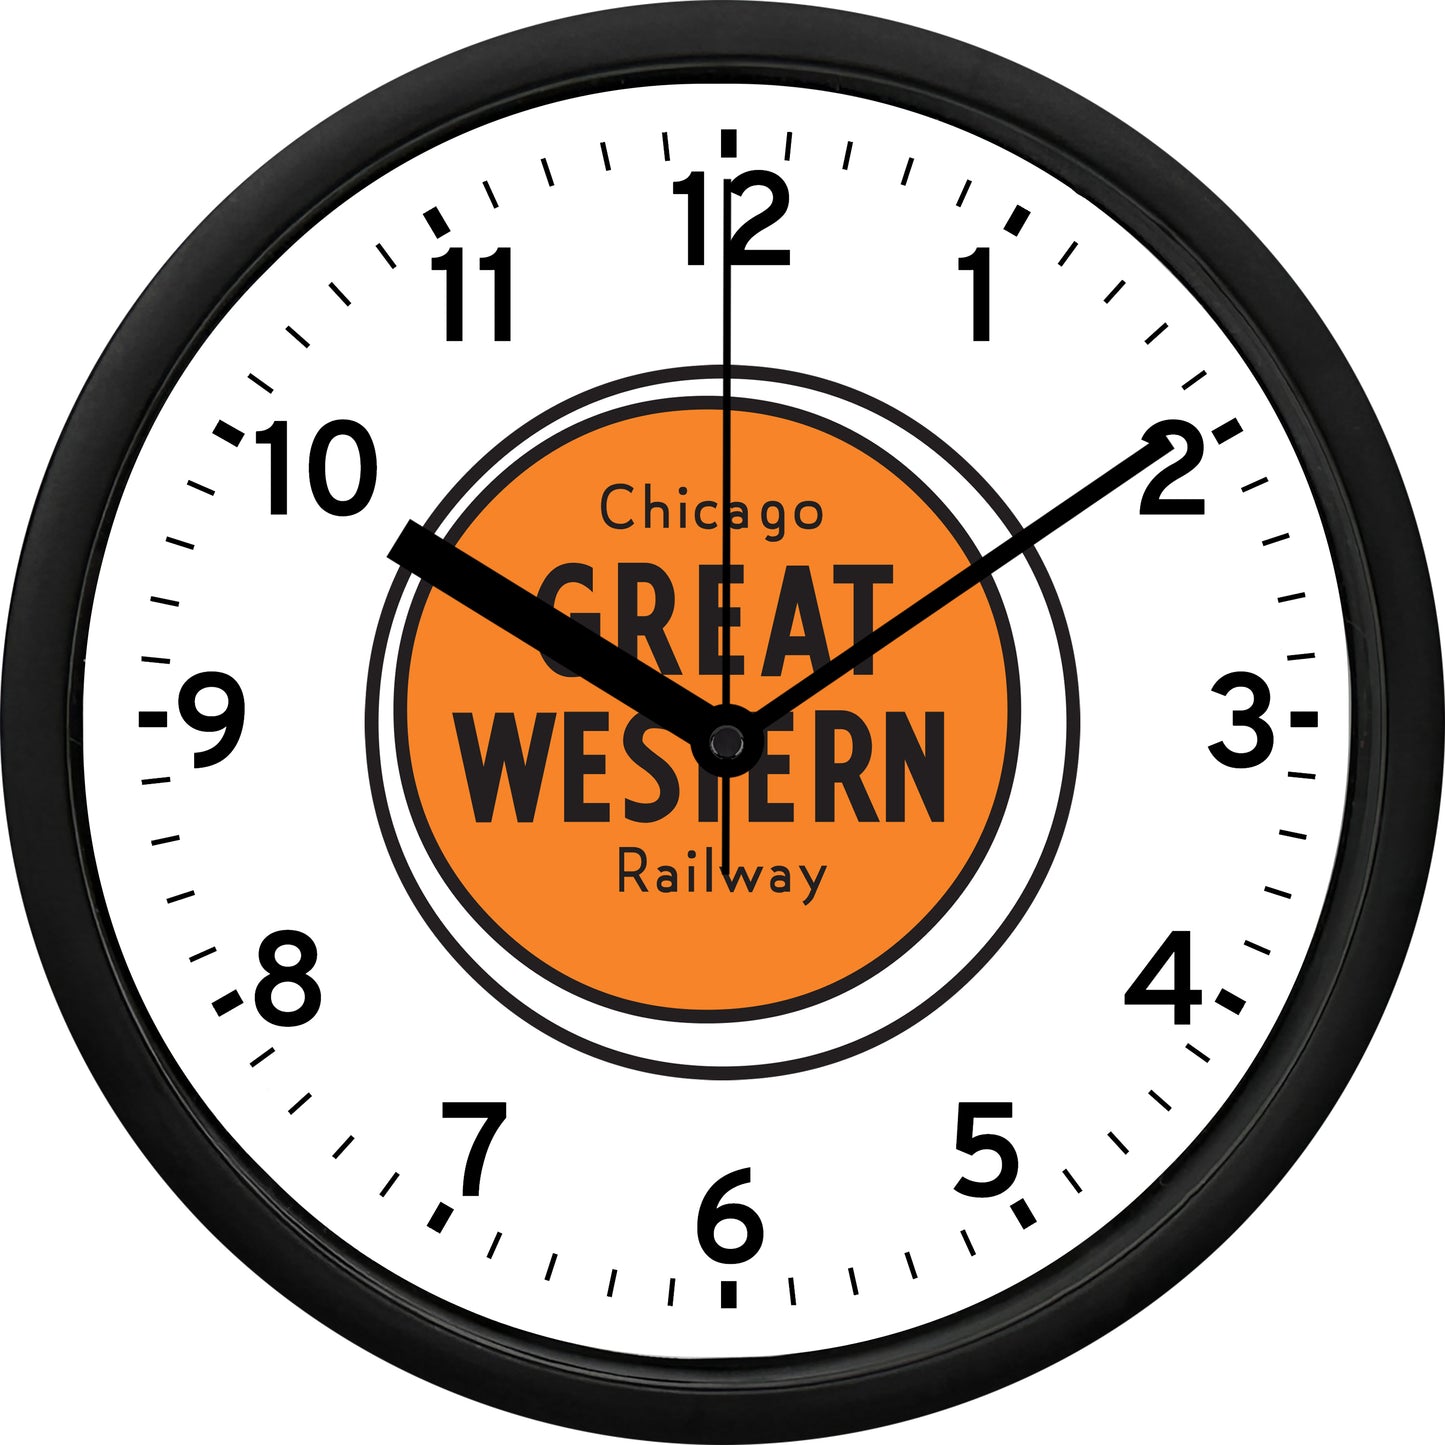 Chicago Great Western Railway Wall Clock